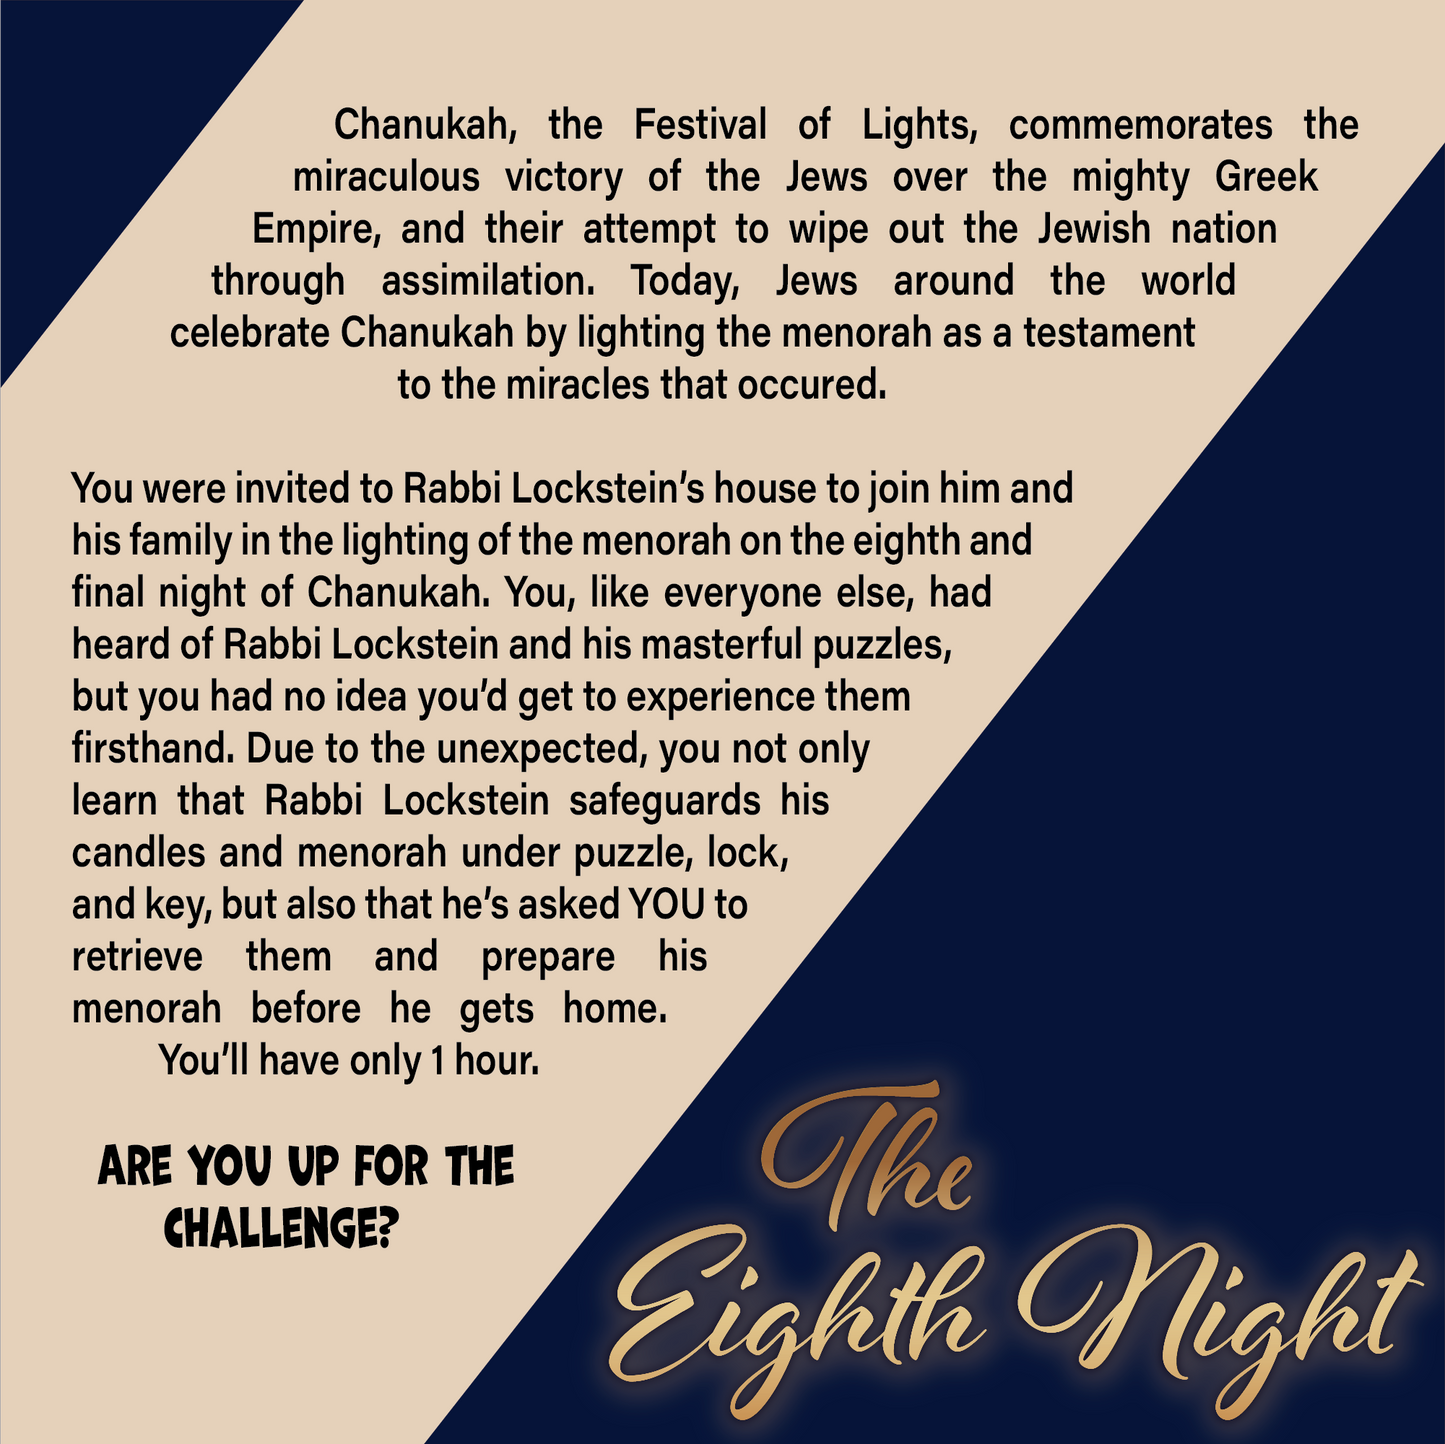 The Eighth Night